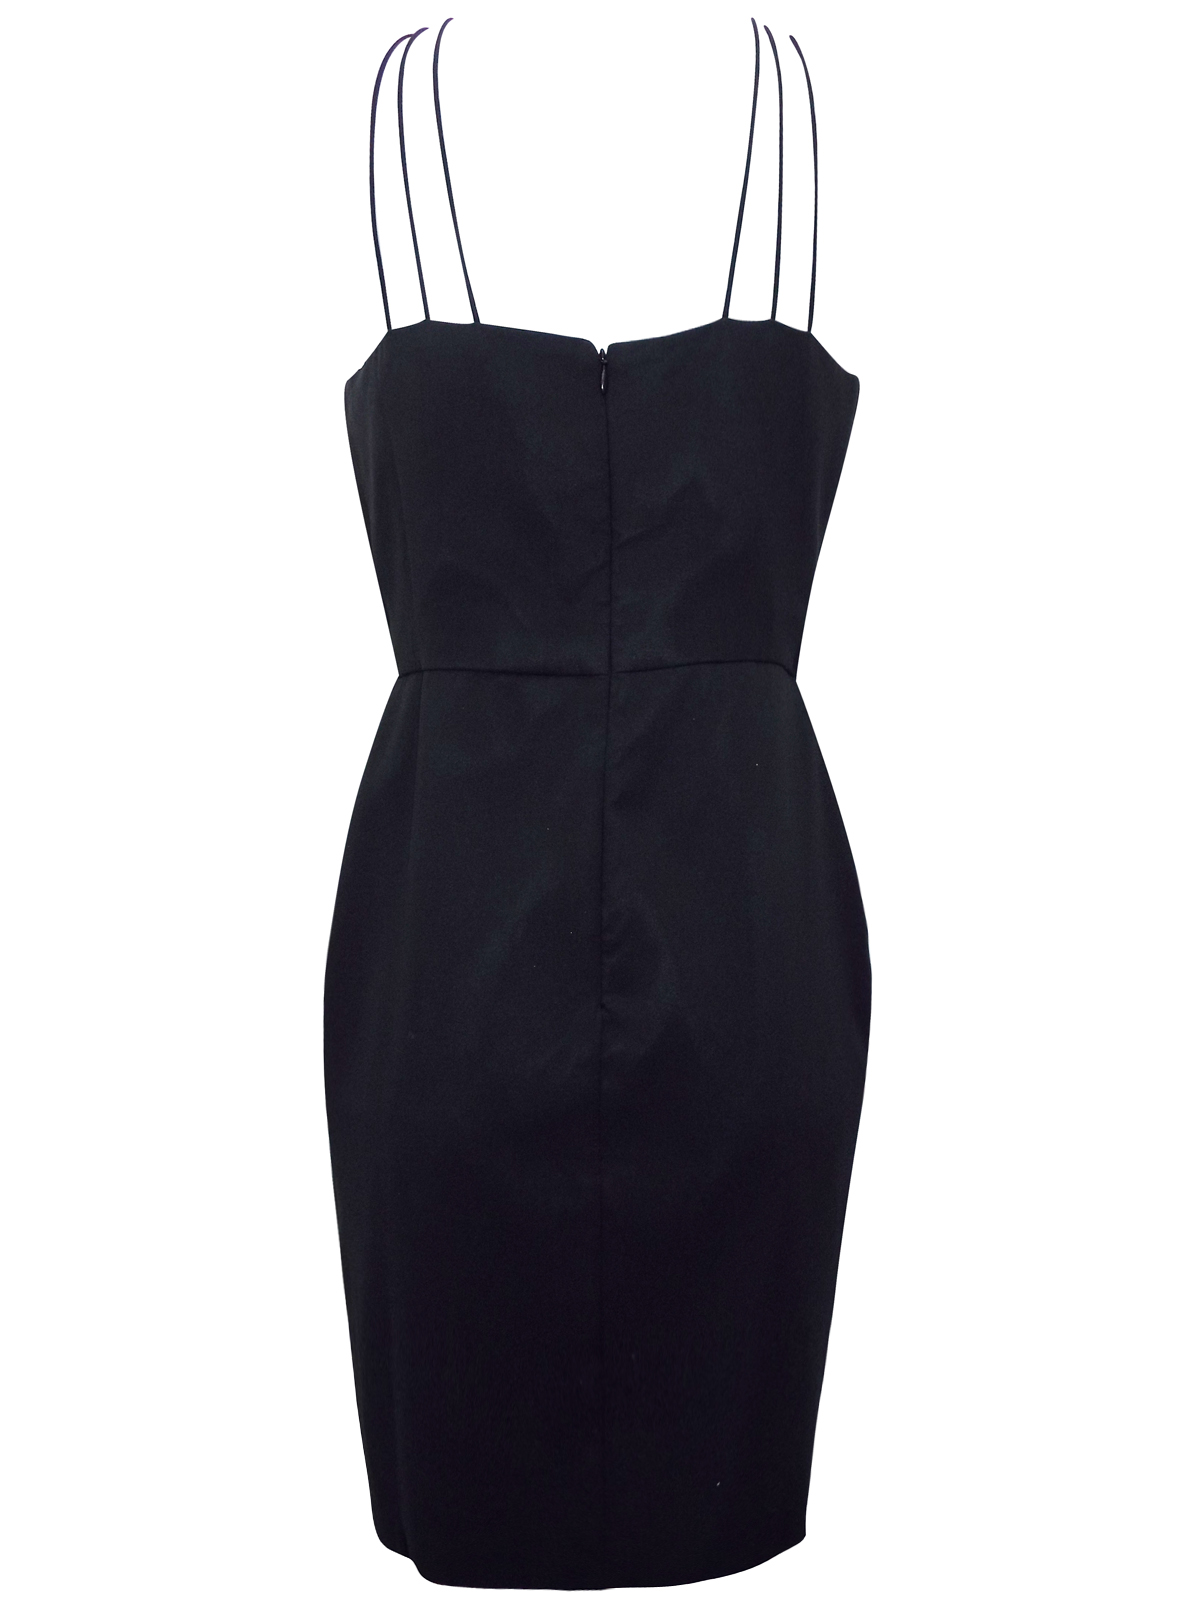 V Label London - - VLabel BLACK Brompton Mini Dress - Size 14 to 16